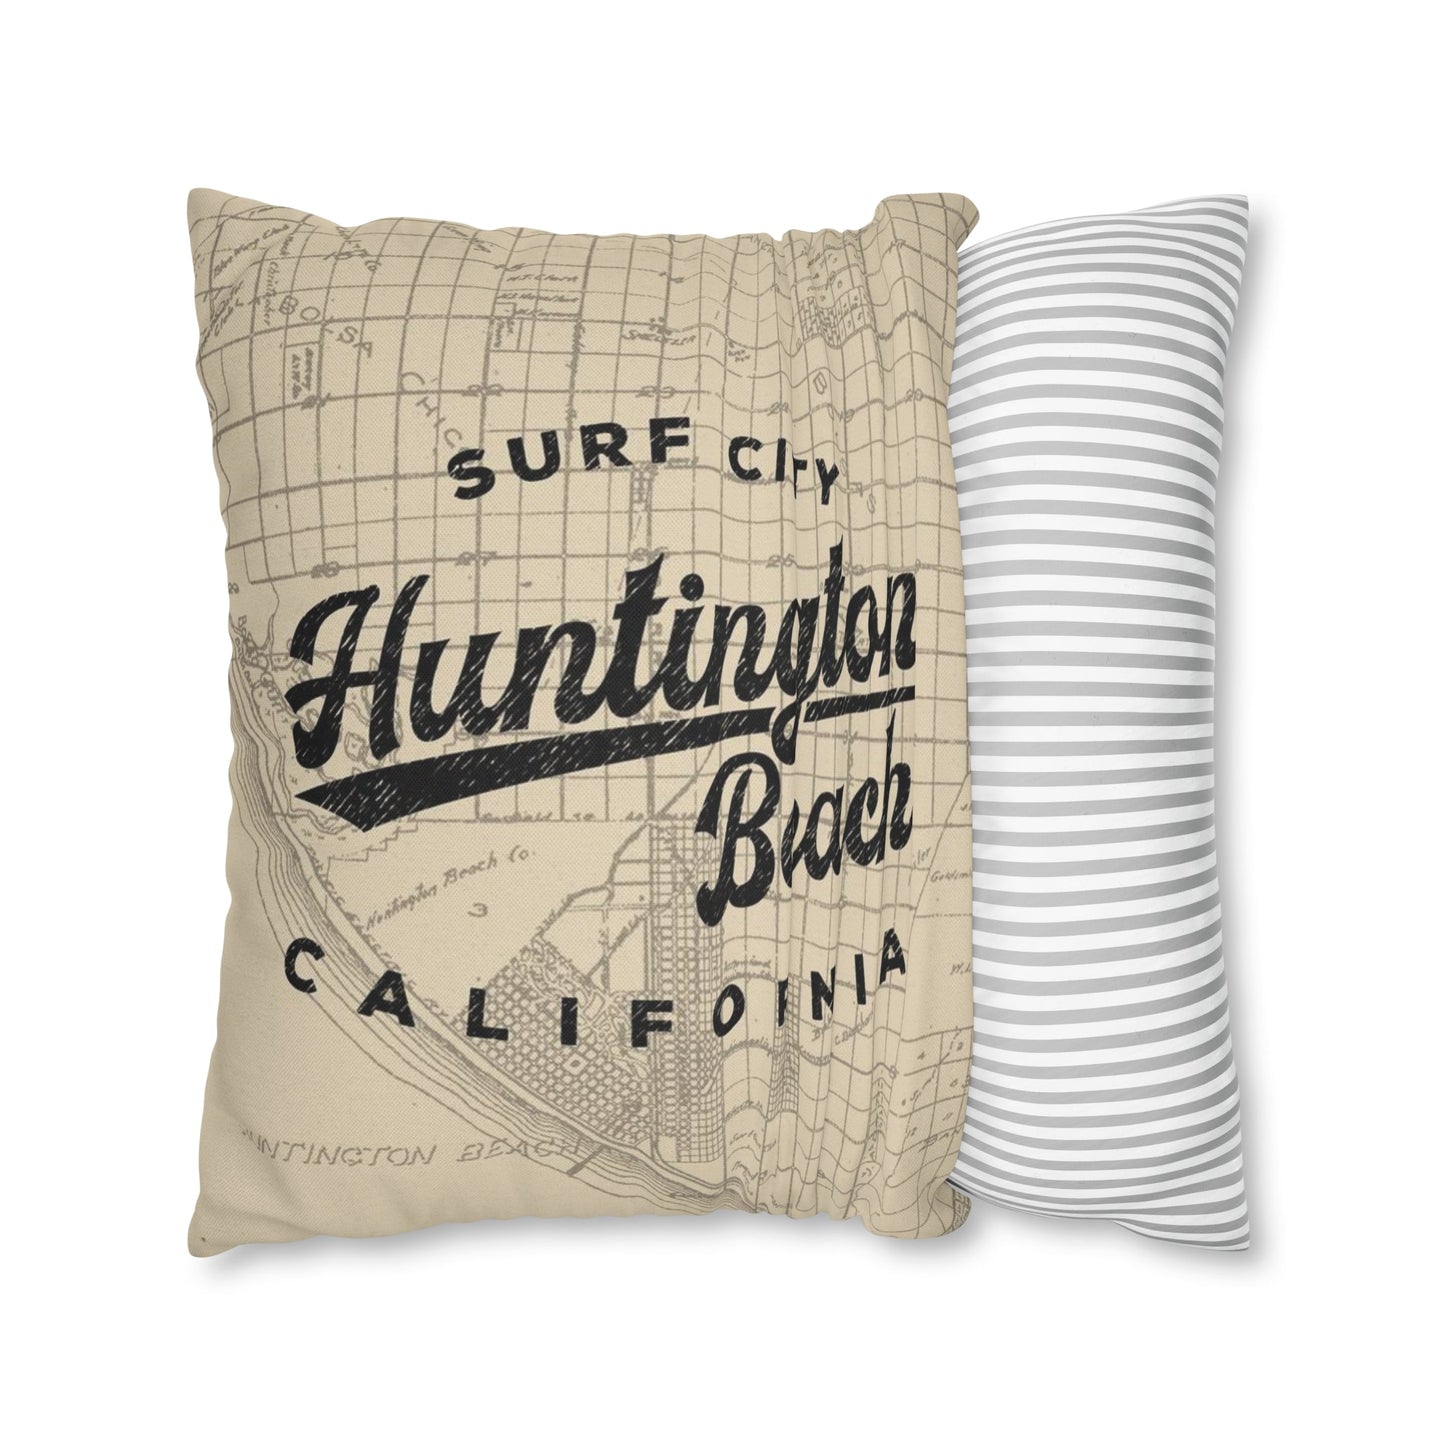 Huntington Beach California Throw Pillow